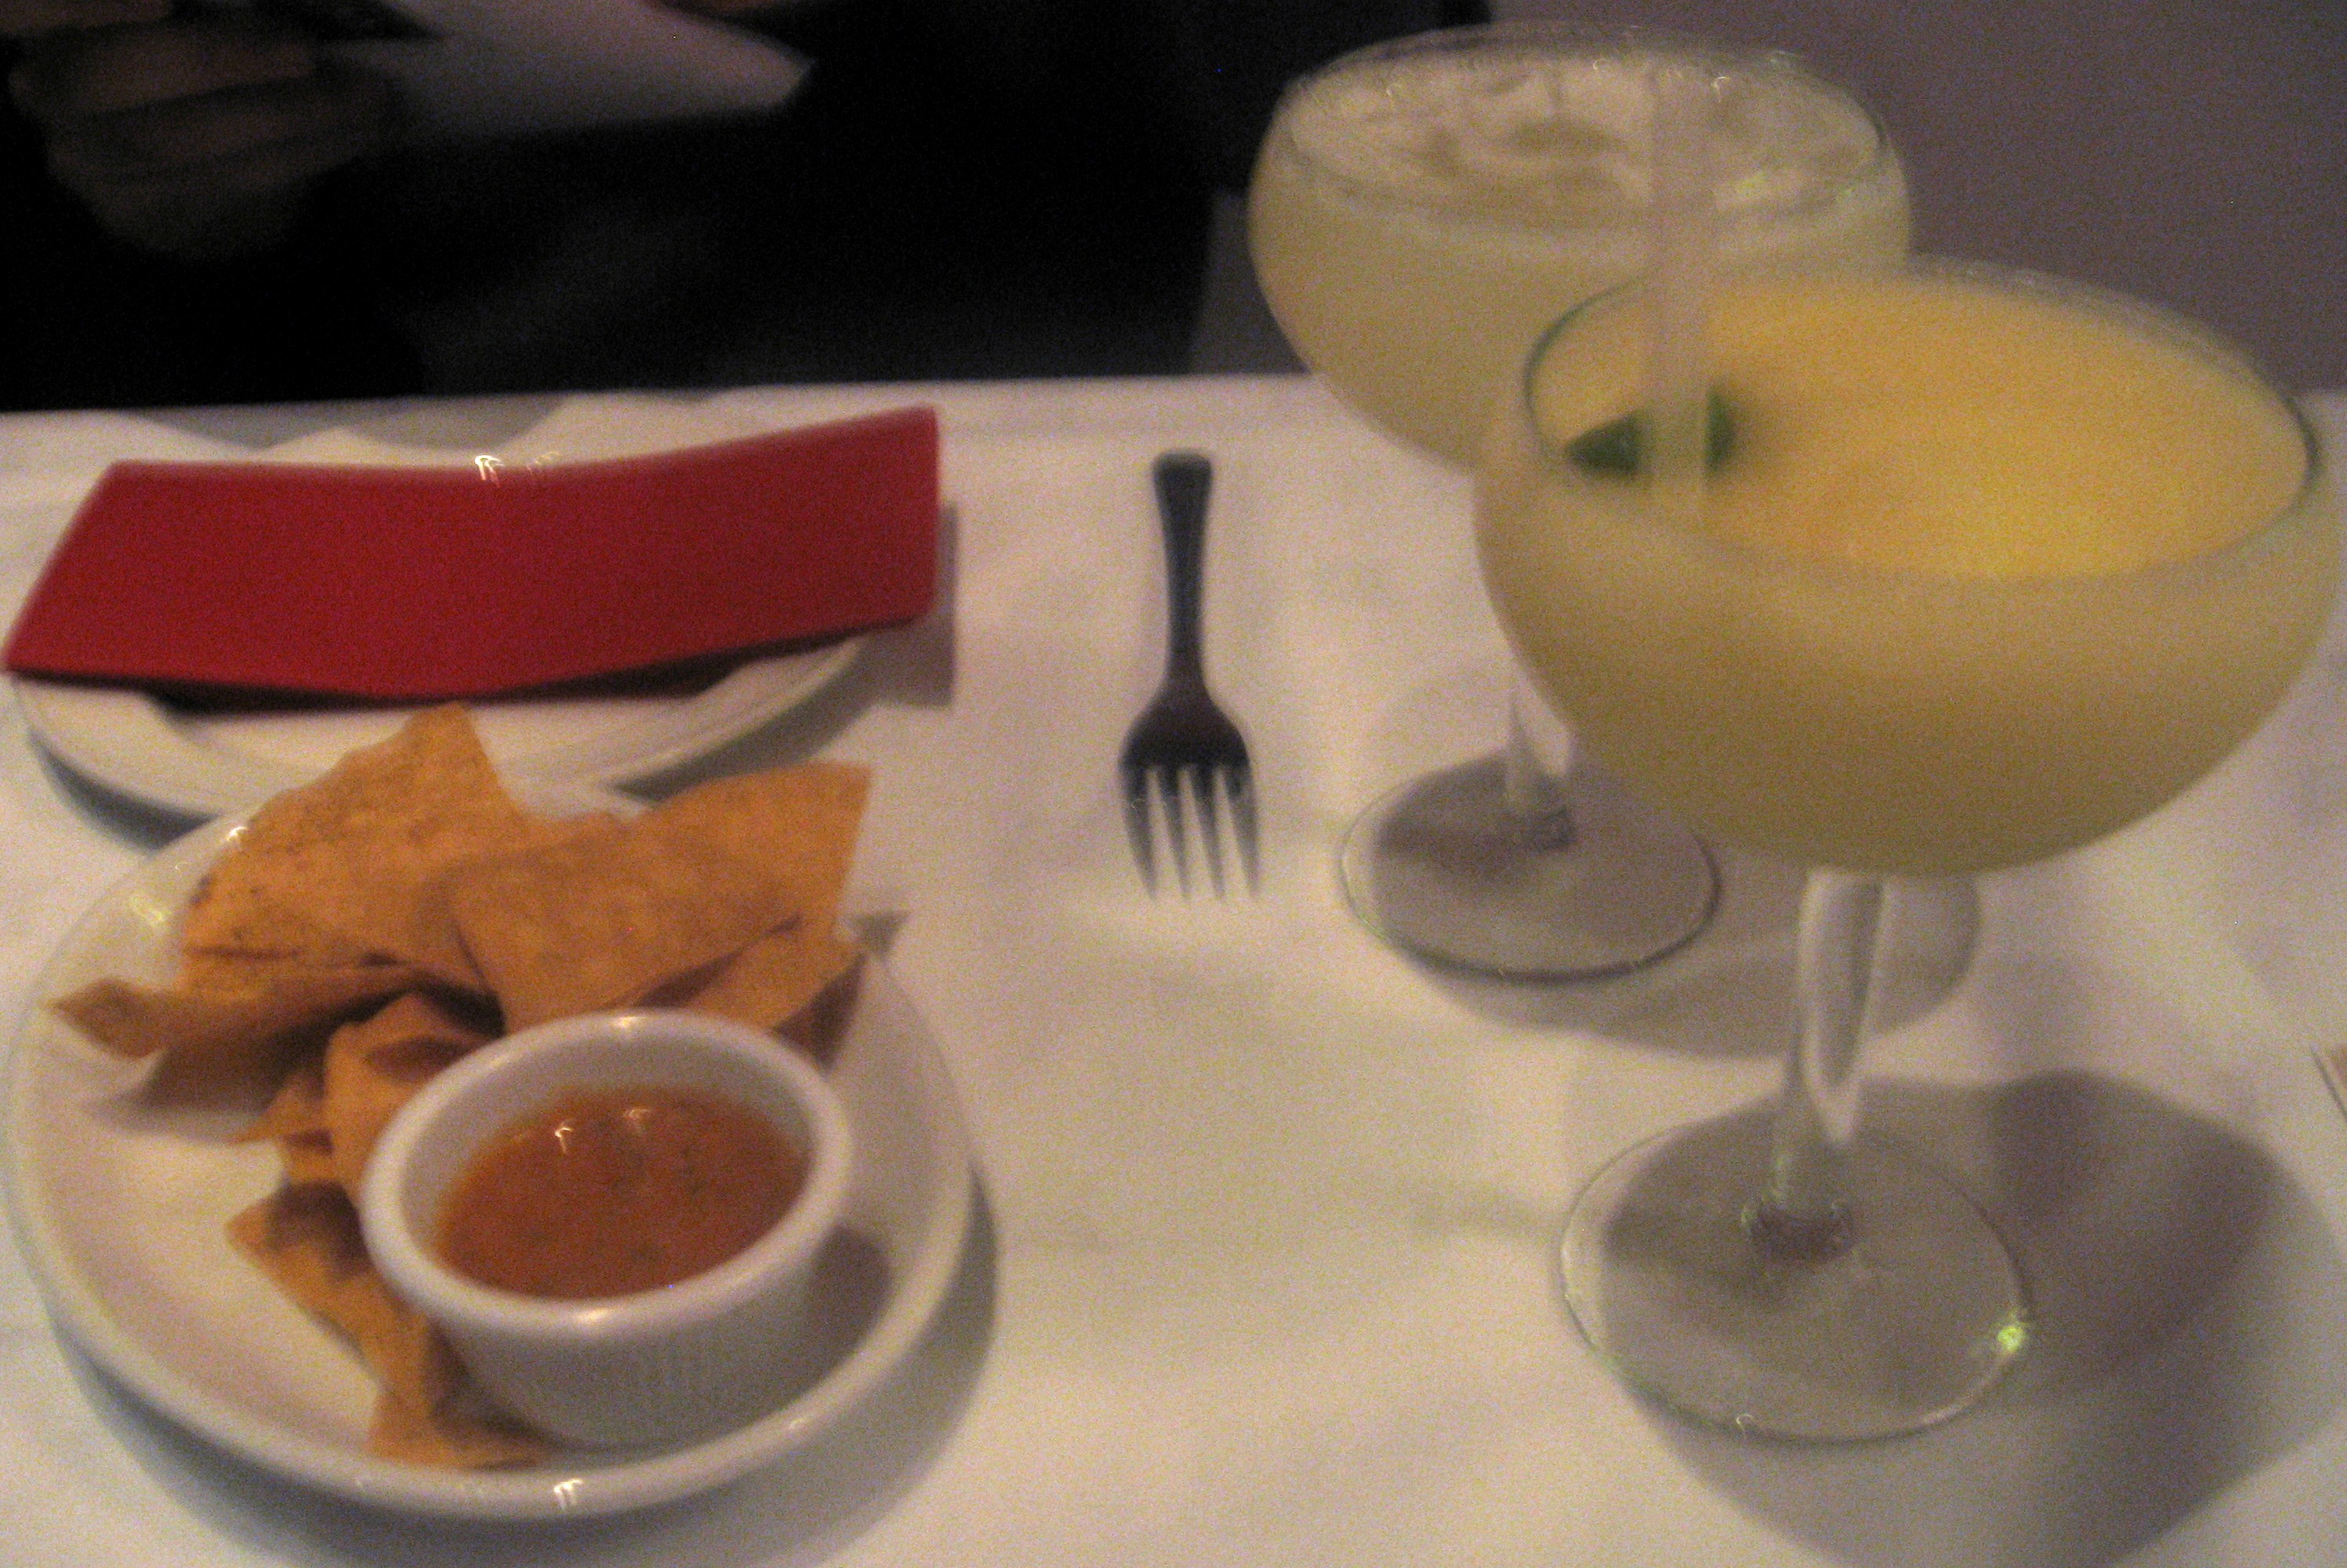 Margaritas and tortilla chips